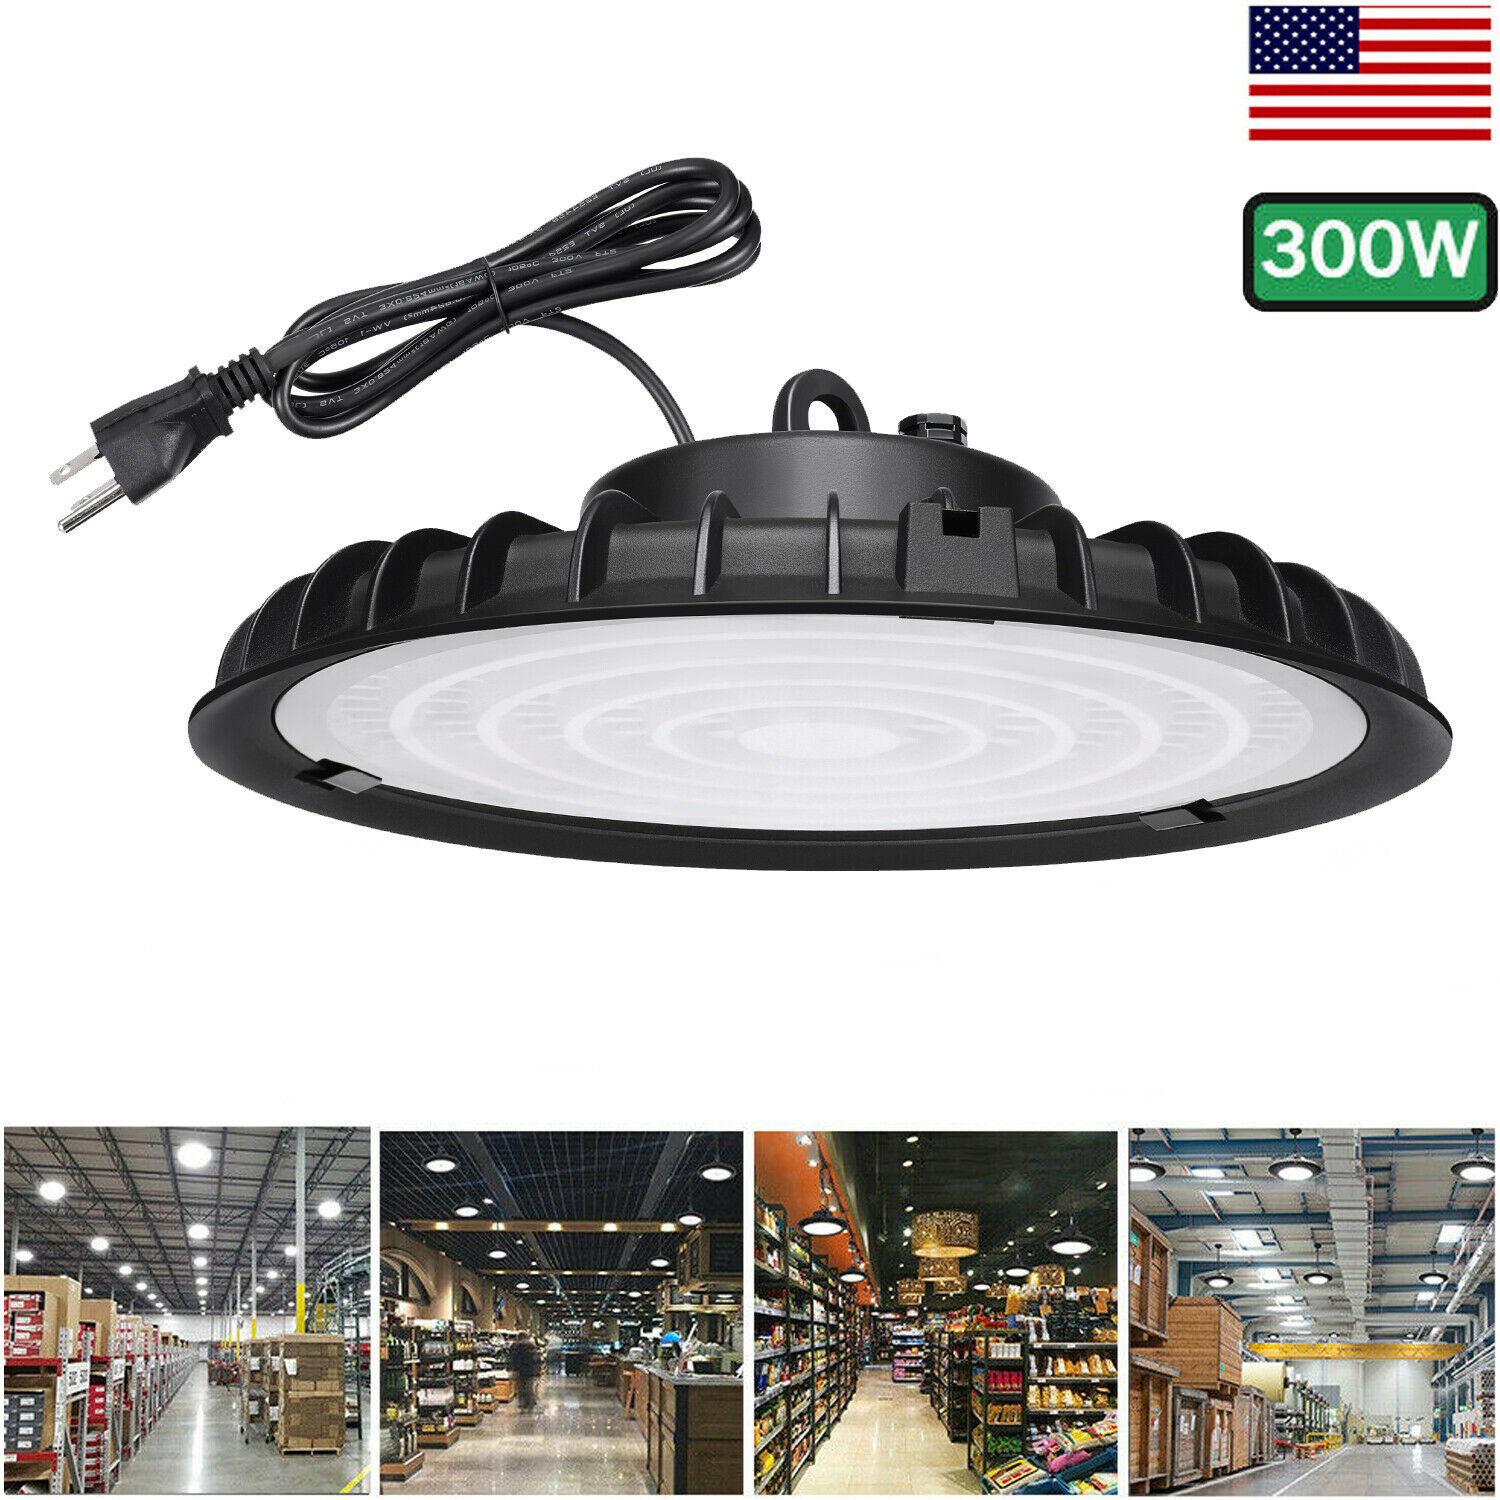 300w Ufo Led High Bay Light 6000k Shop Work Warehouse Industrial Lighting